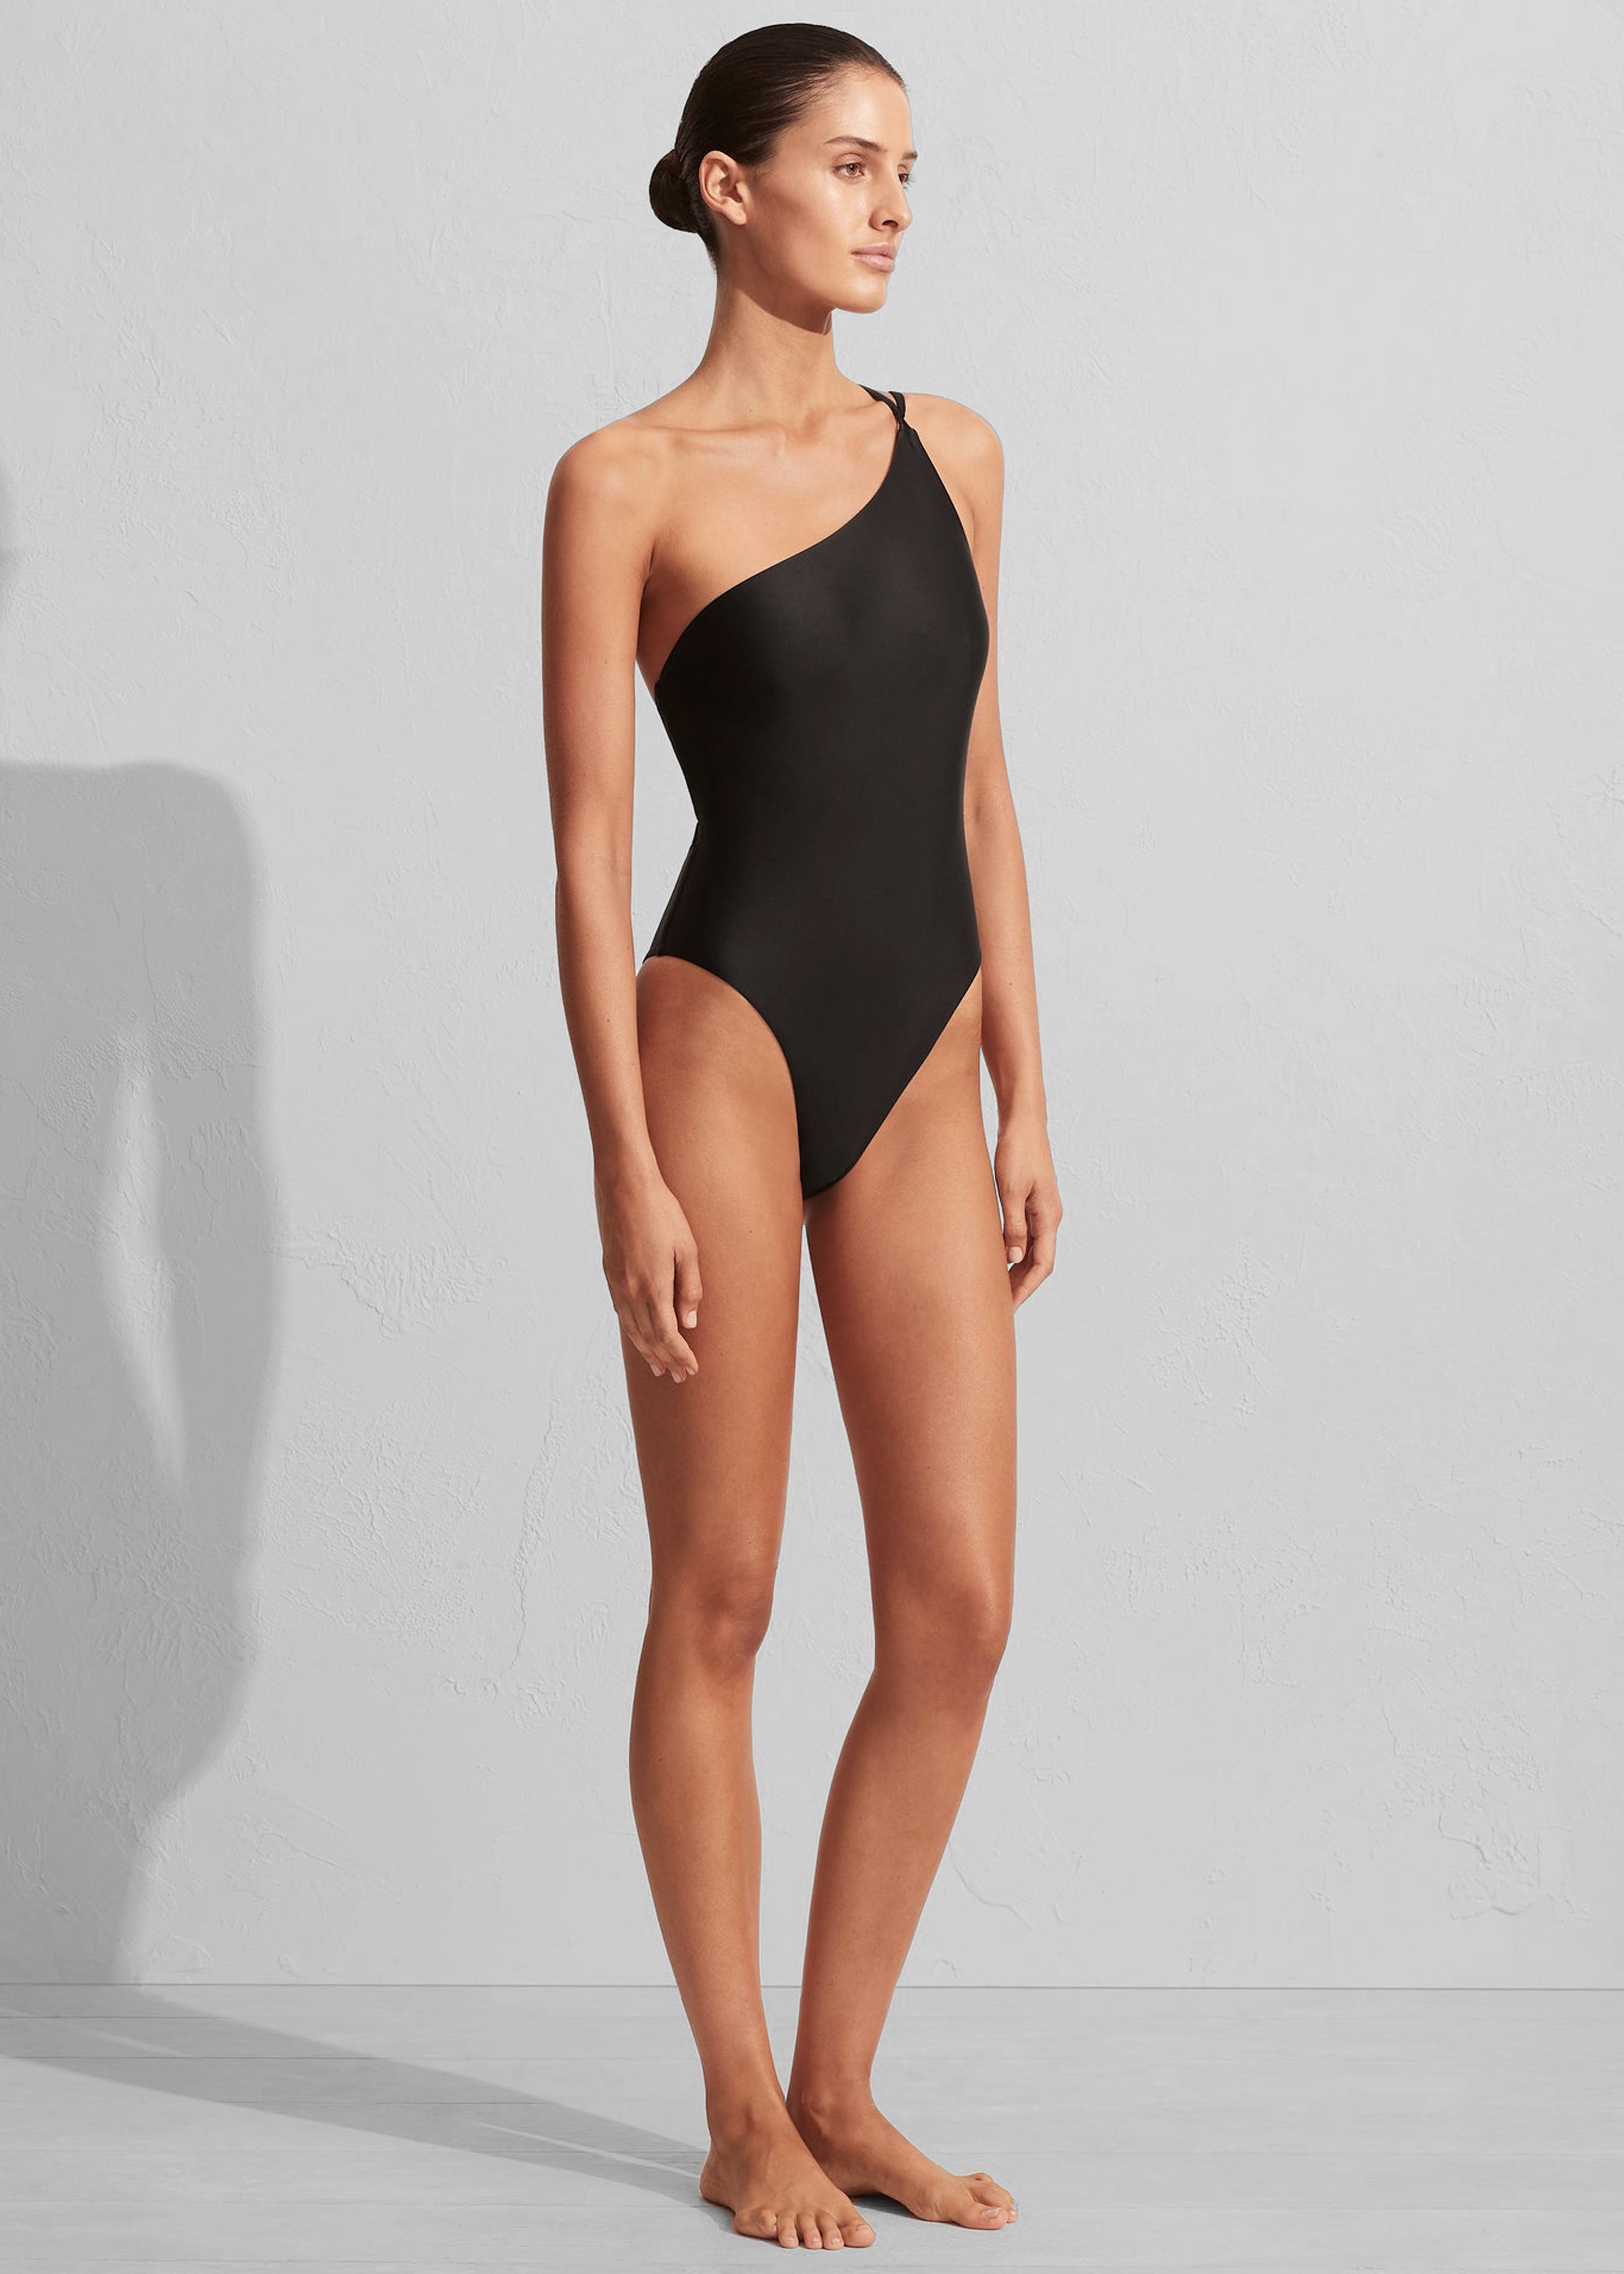 Matteau One Shoulder Maillot Swimsuit - Black - 5